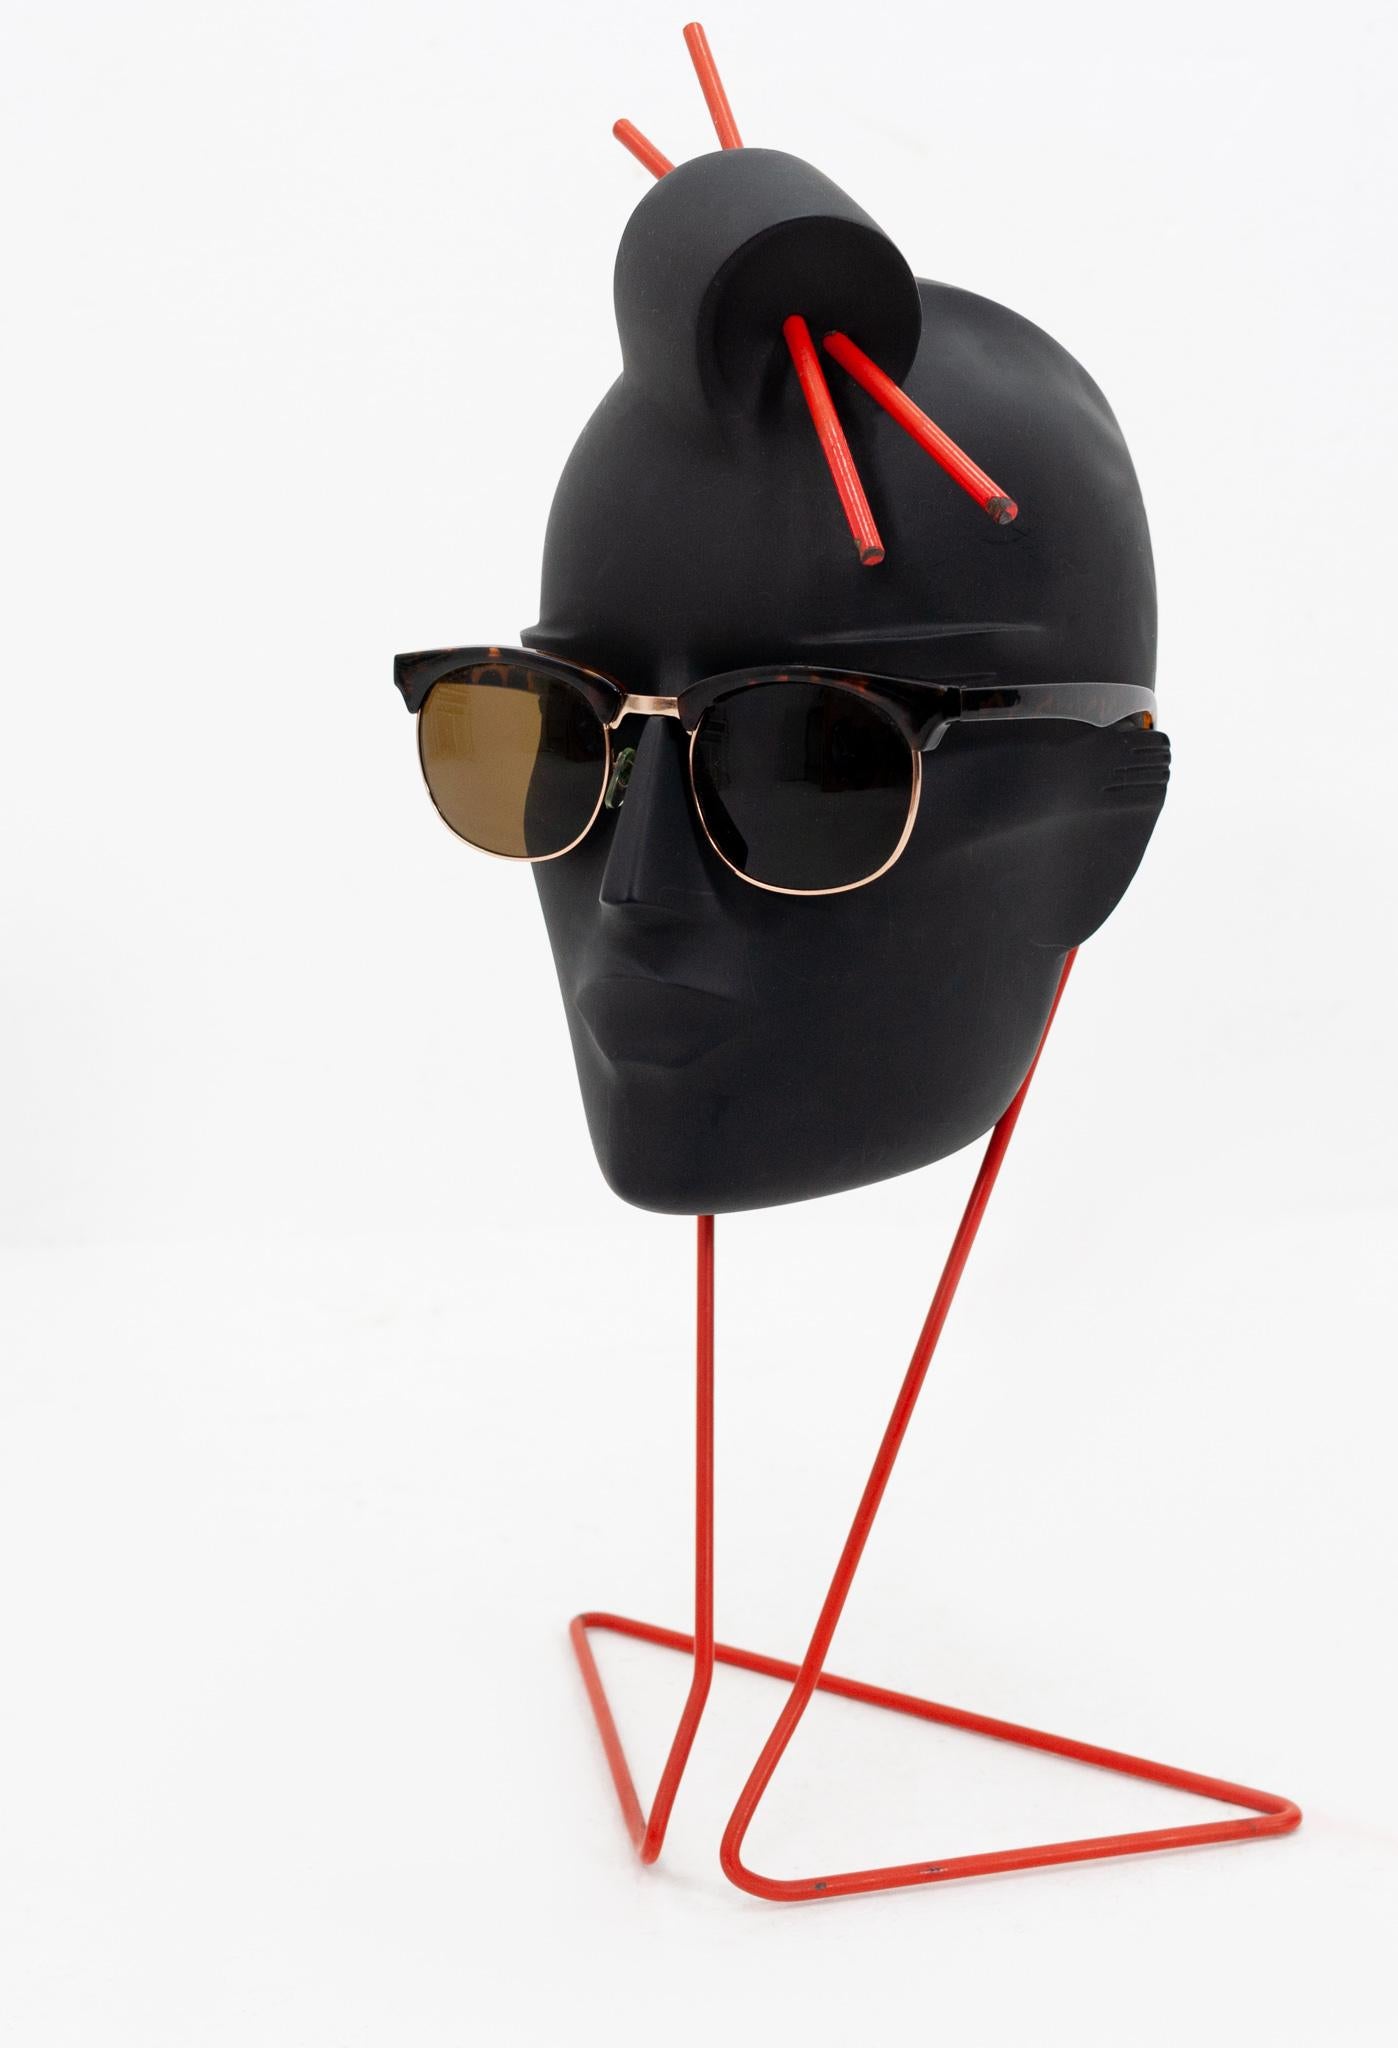 Modern Head Sculpture in Black Plastic by Lindsey B